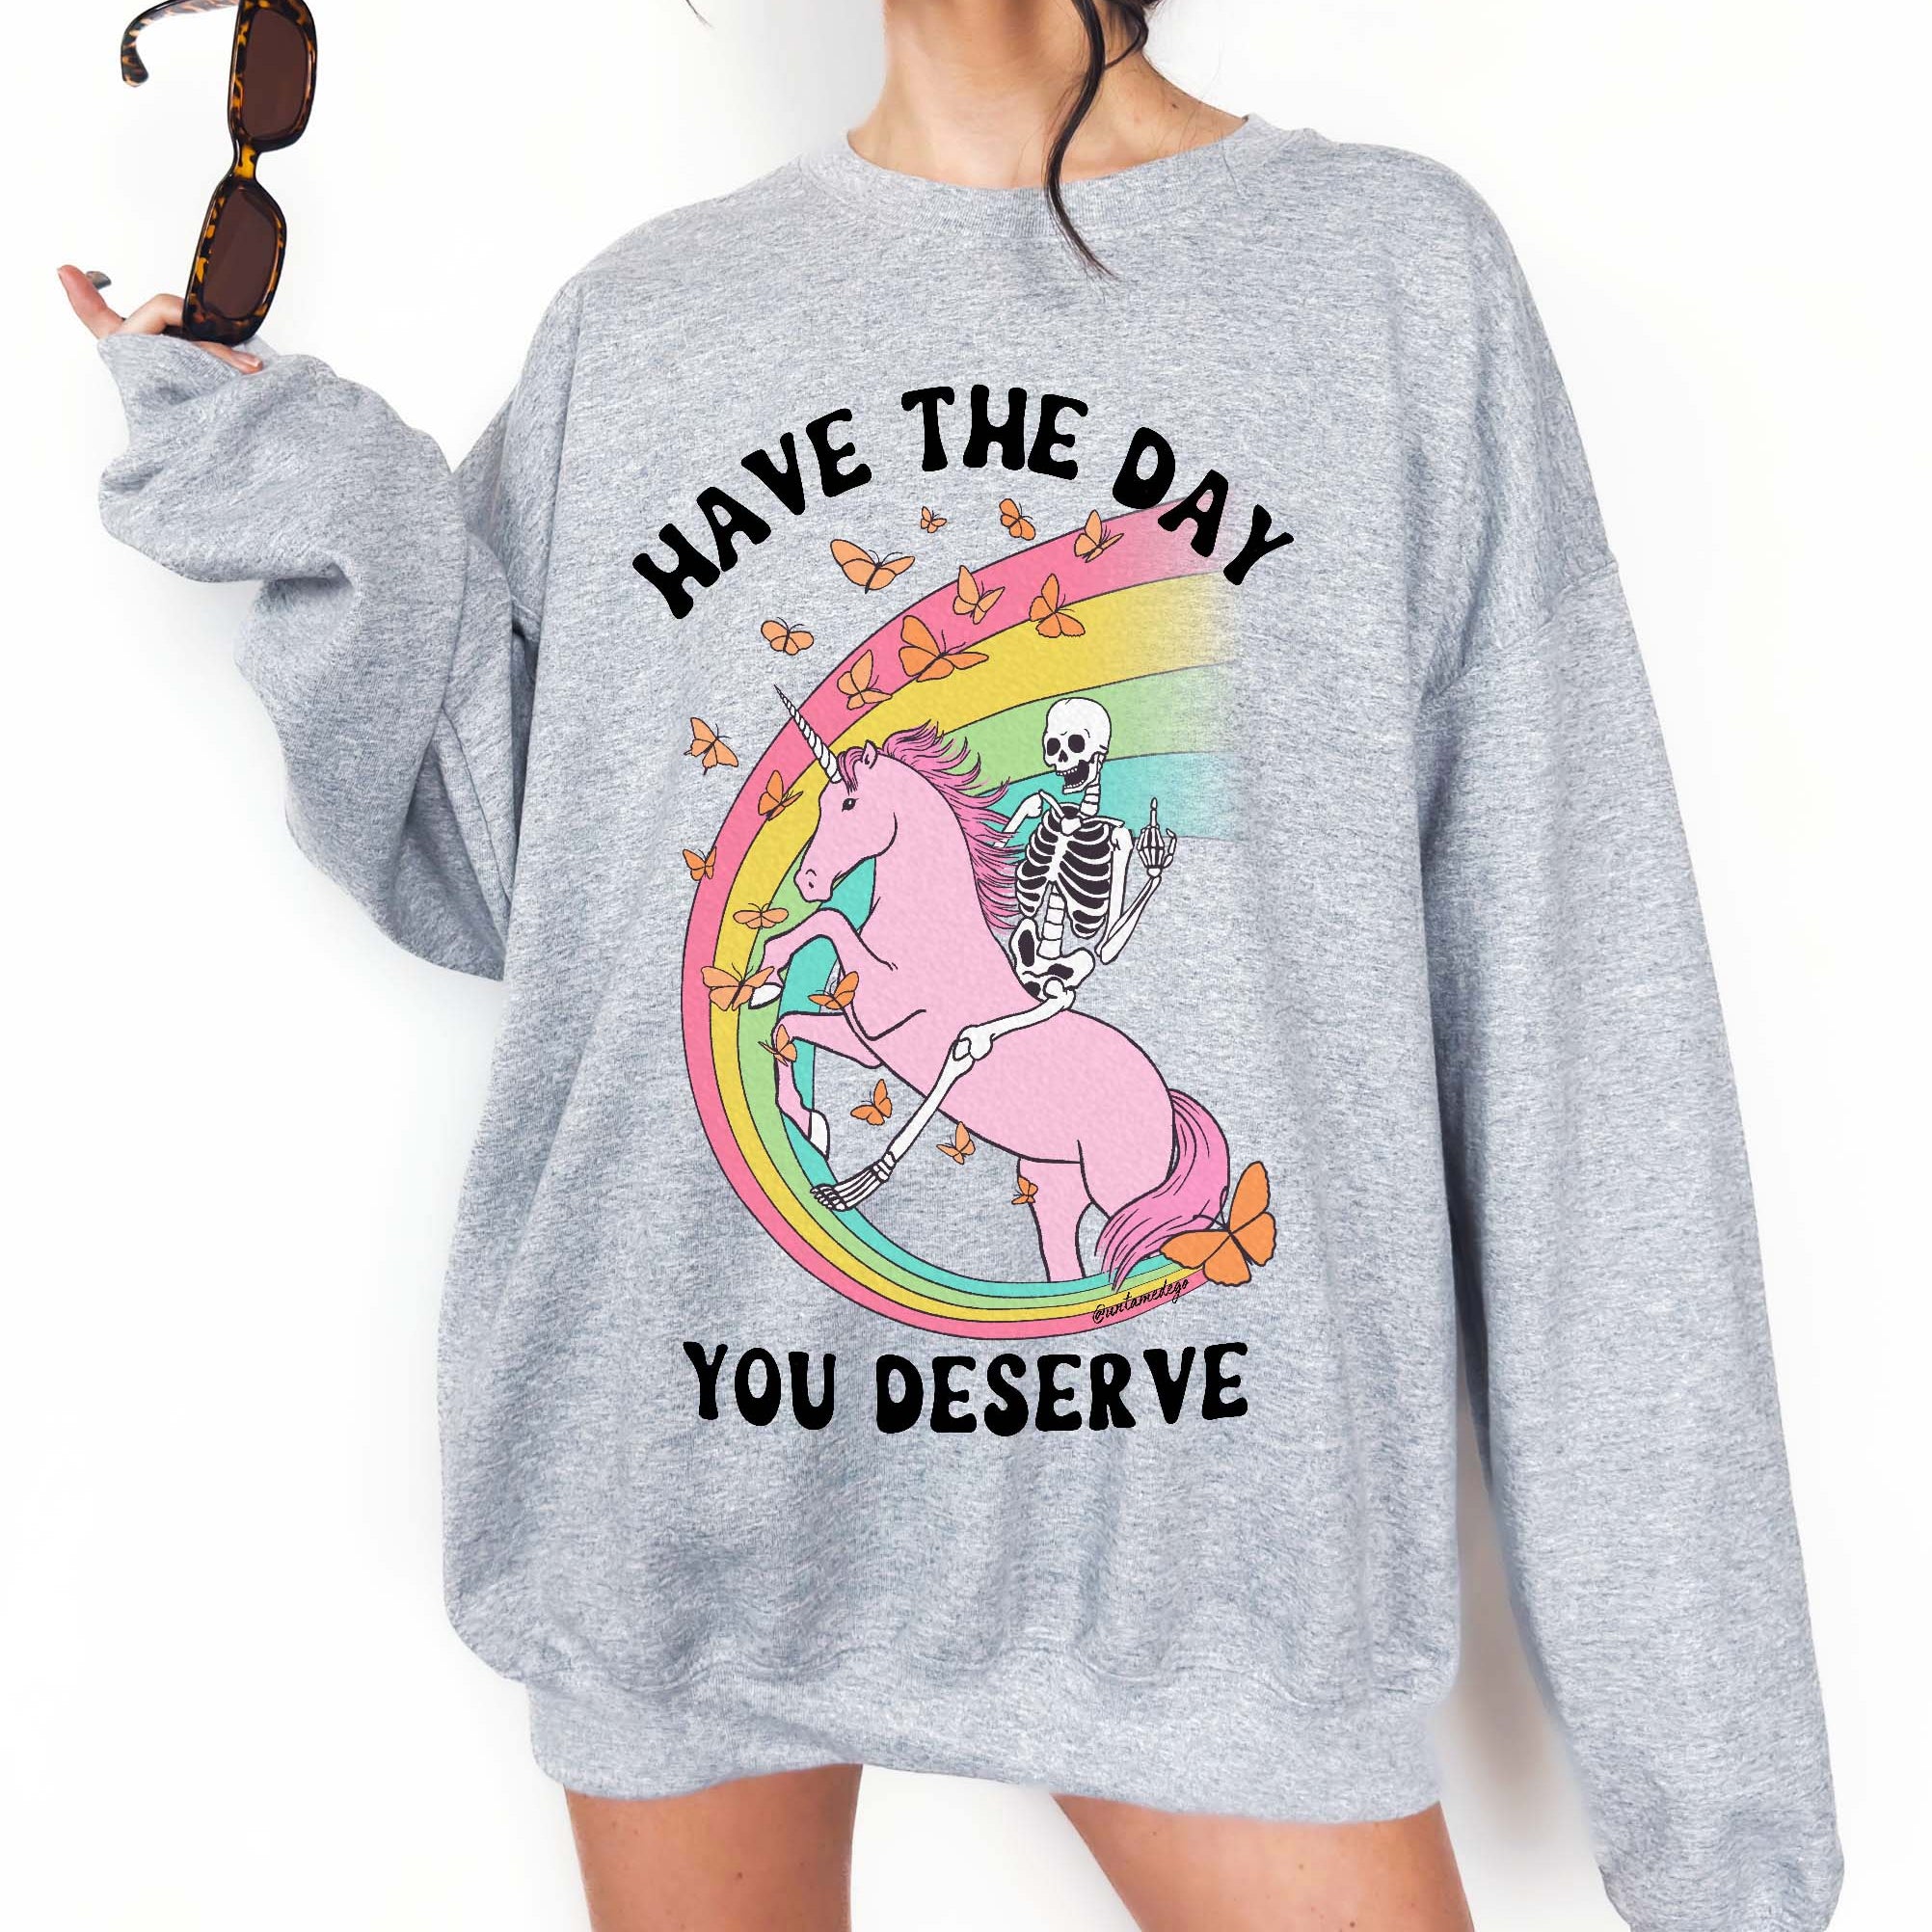 Have The Day You Deserve Crew Exclusive Sweatshirt